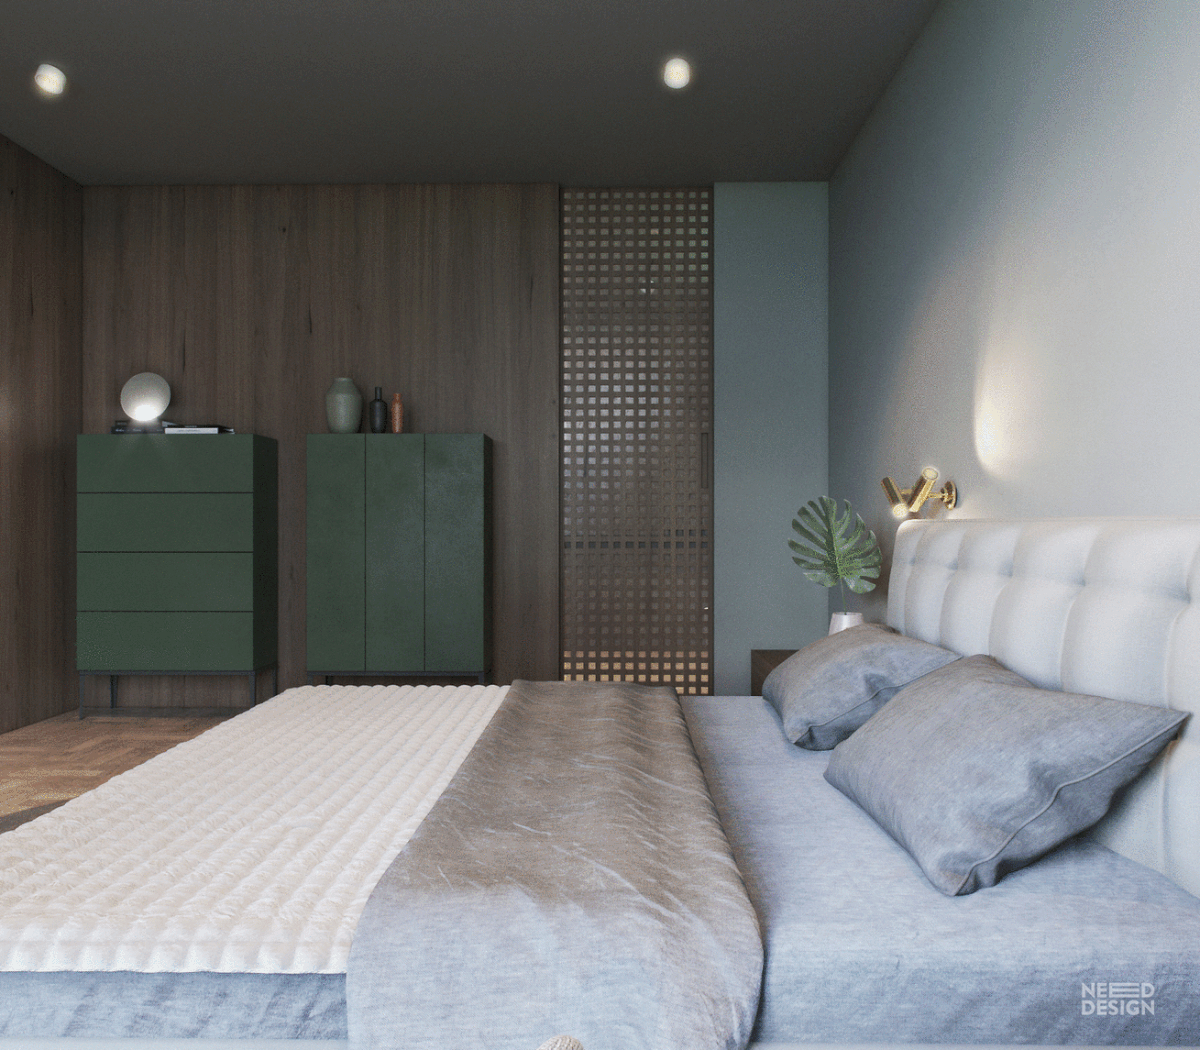 Interior Cottage house livingroom bedroom kitchen Minotti vibia design